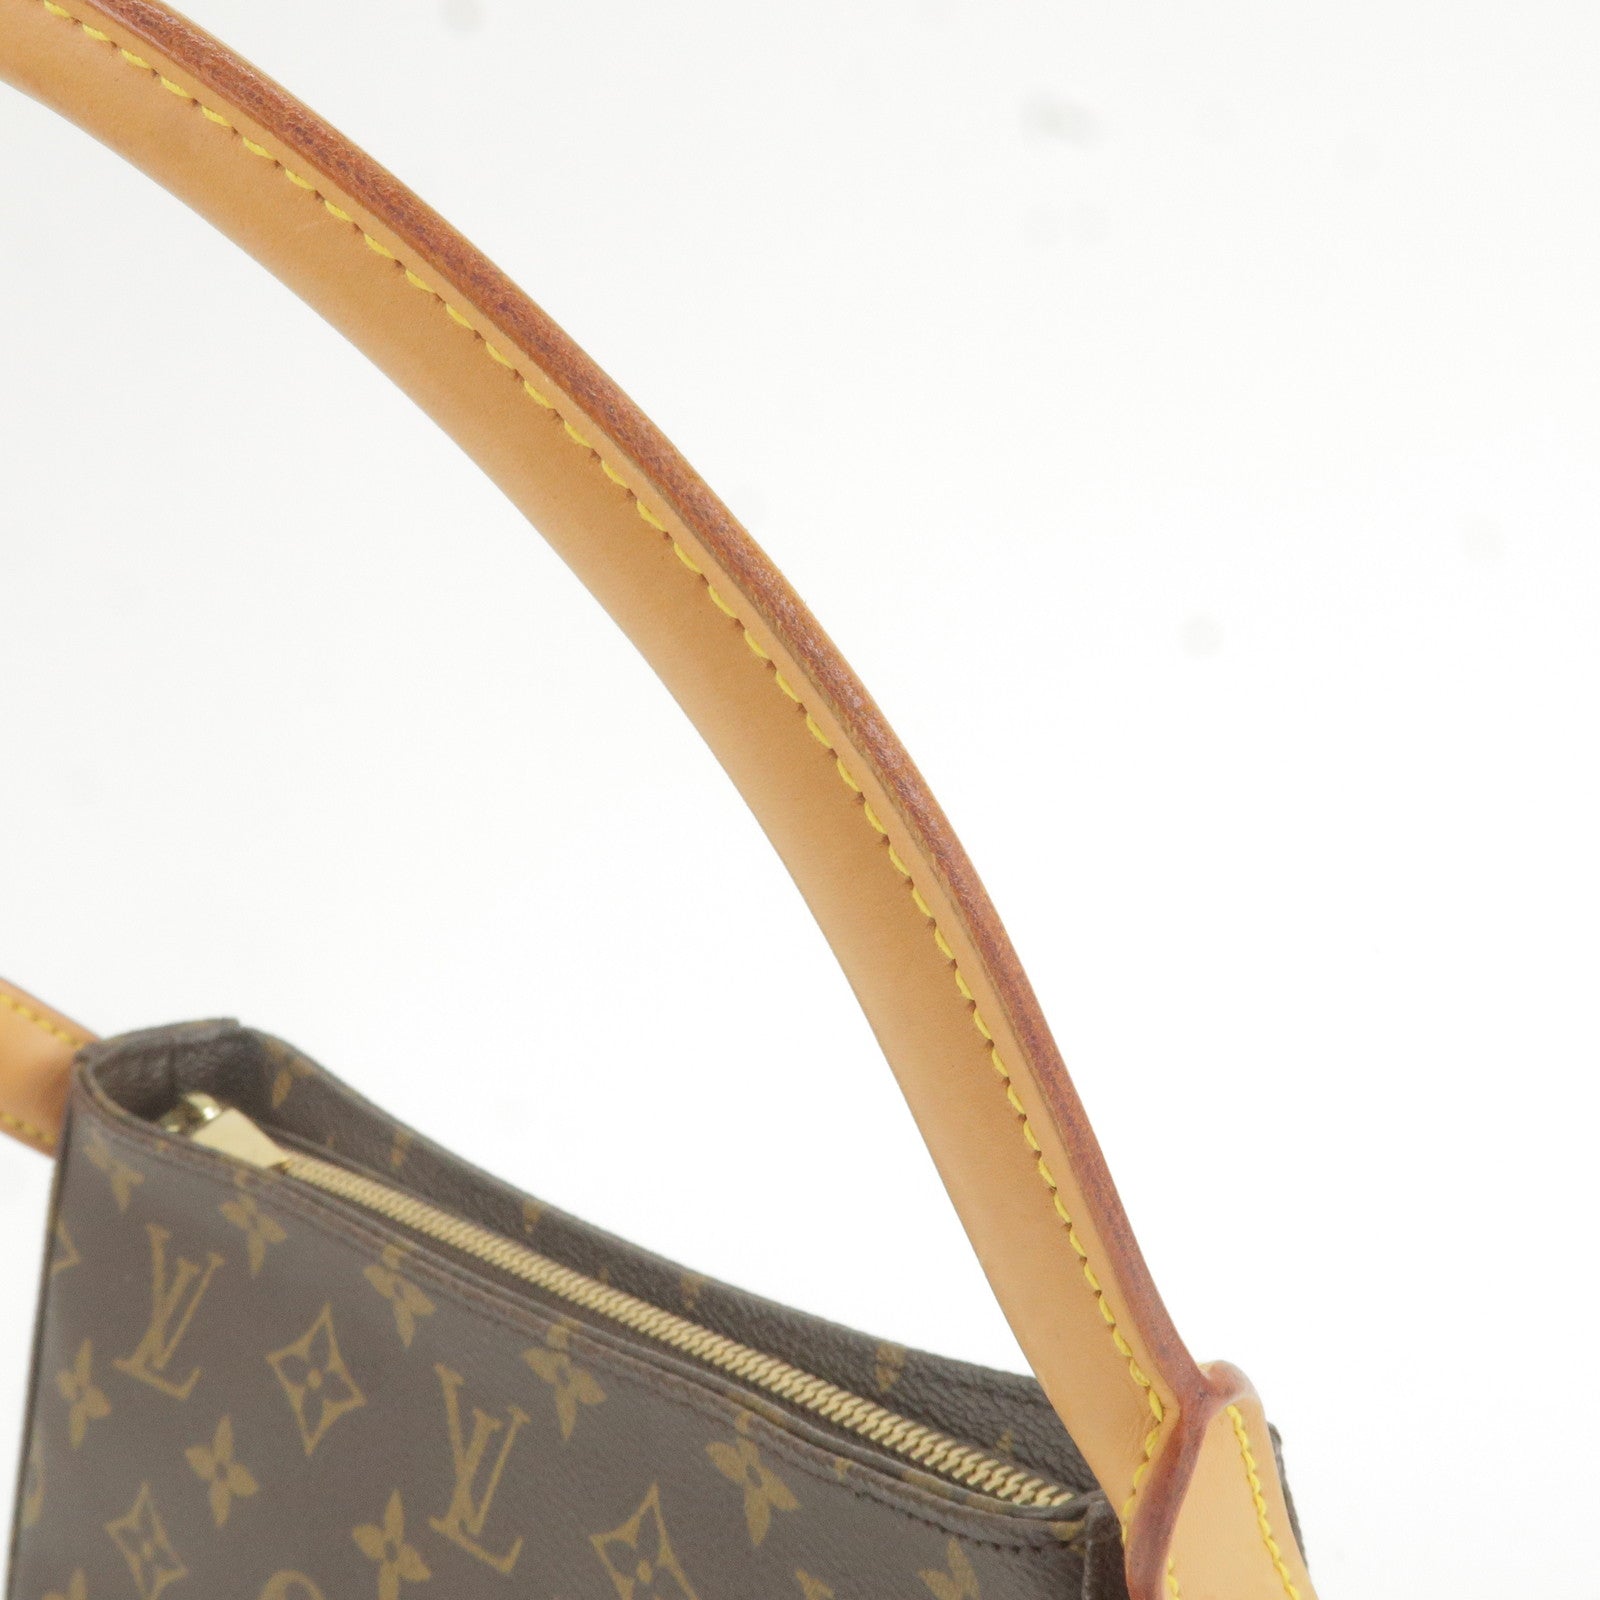 Louis Vuitton Looping mm Brown Canvas Shoulder Bag (Pre-Owned)